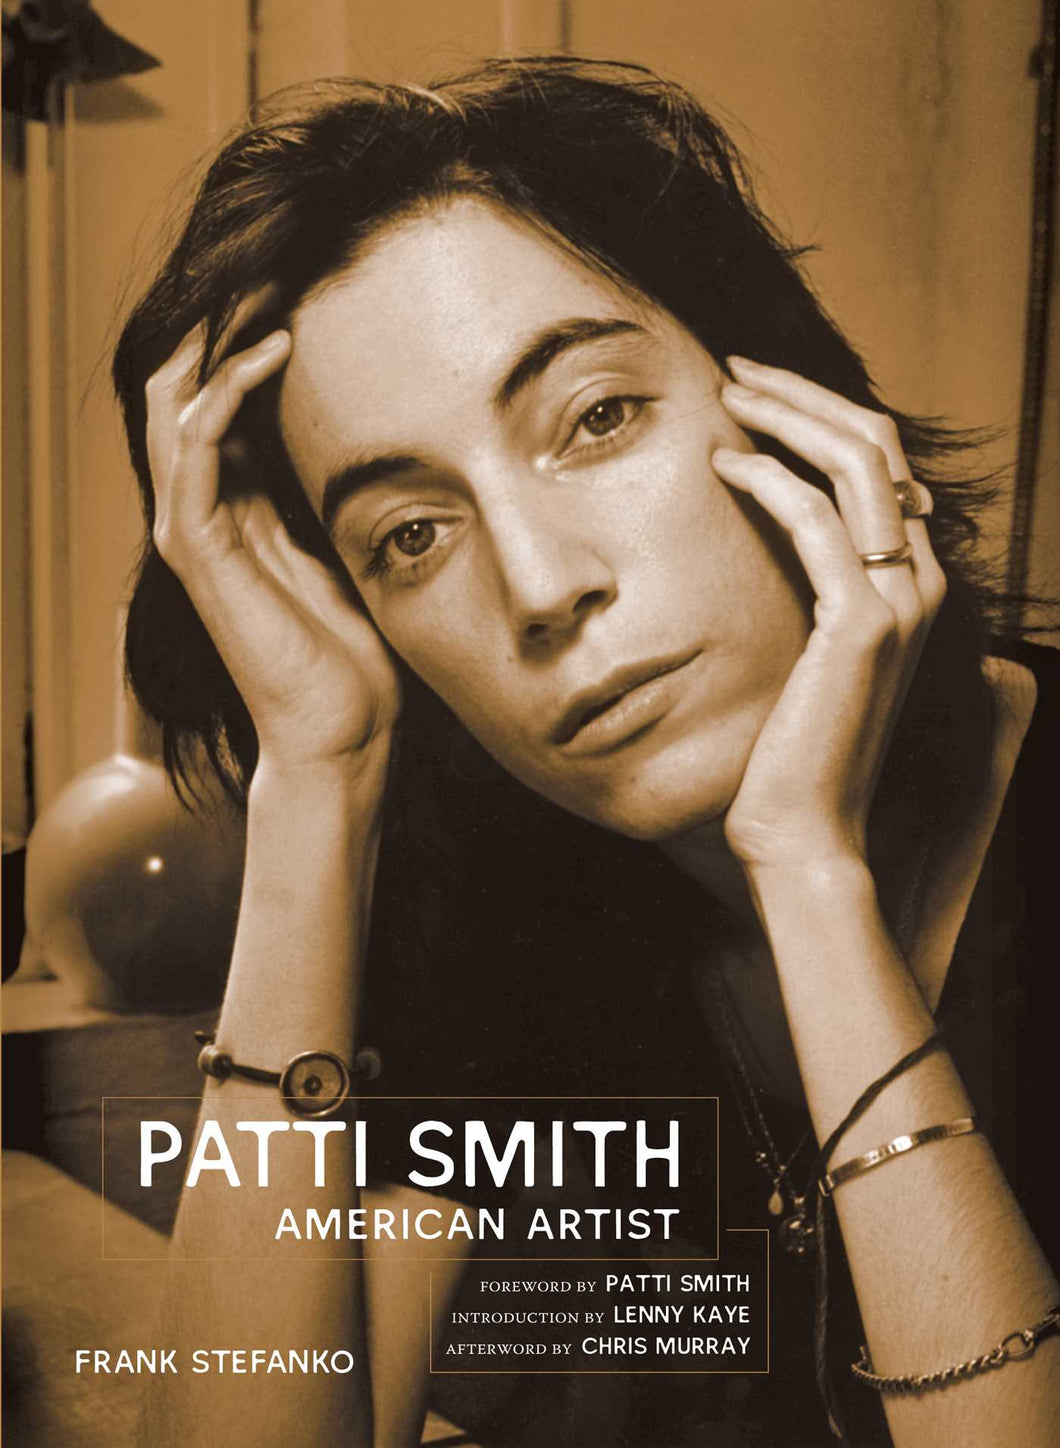 Pattie Smith